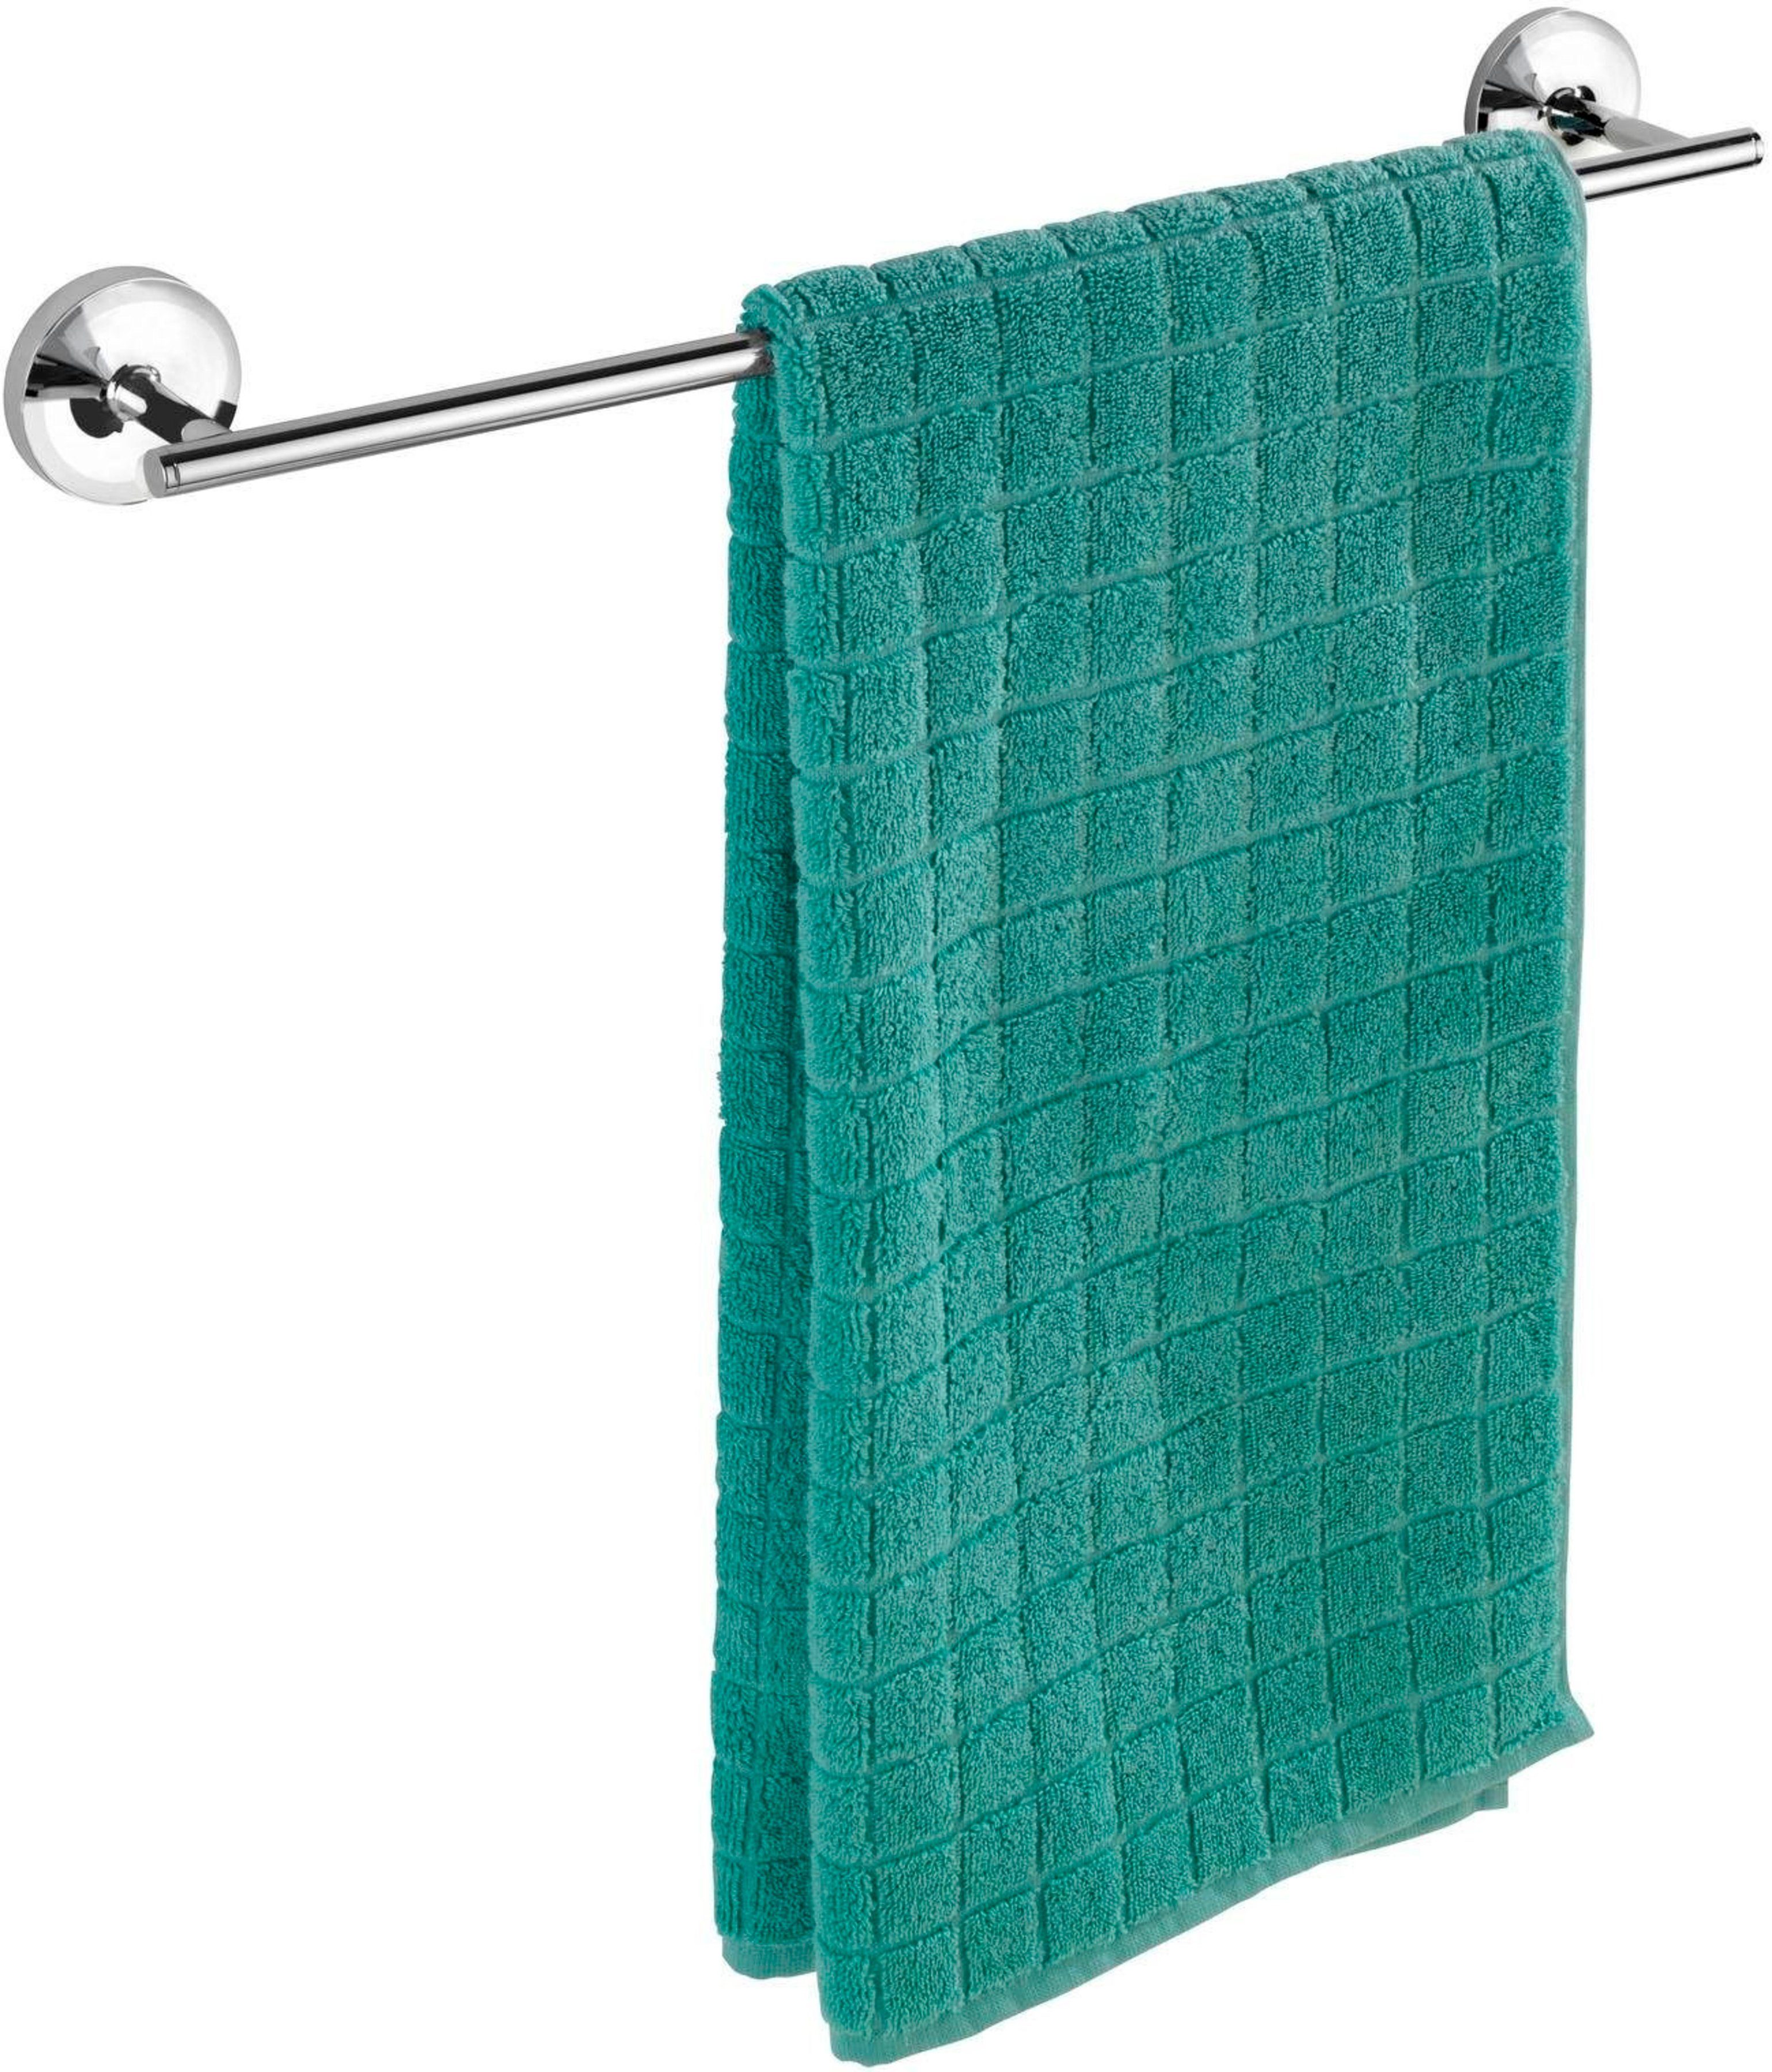 Edel Design Chrom Bad Handtuchhalter Handtuchstange Saugnapf System ohne Bohren 